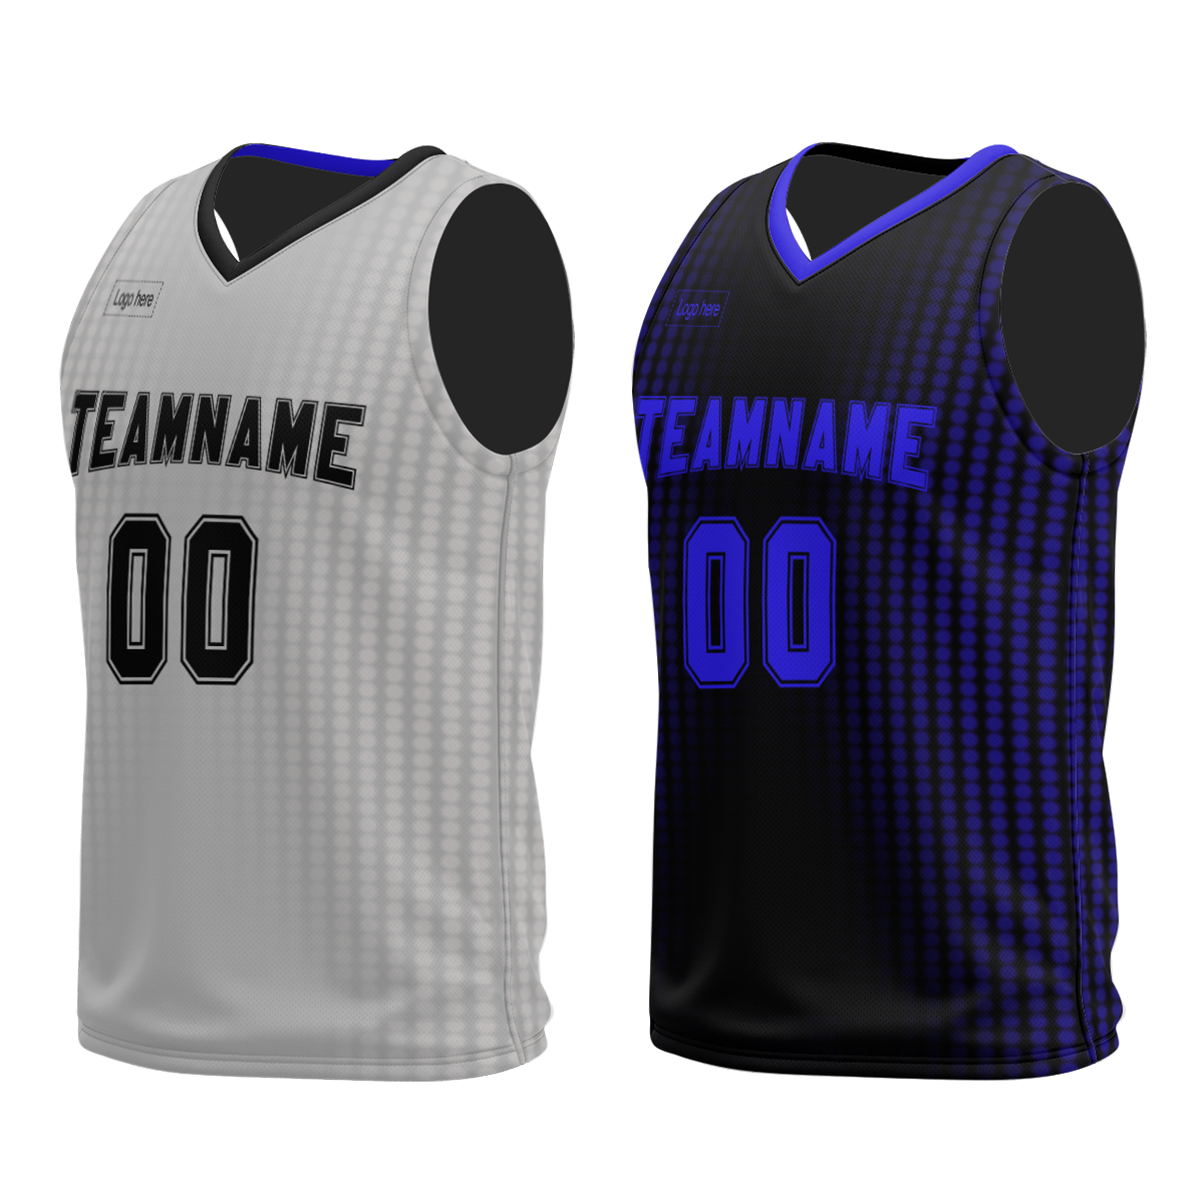 promotion-sales-large-size-sportswear-uniforms-new-design-customized-print-logo-reversible-basketball-jerseys-at-cj-pod-5